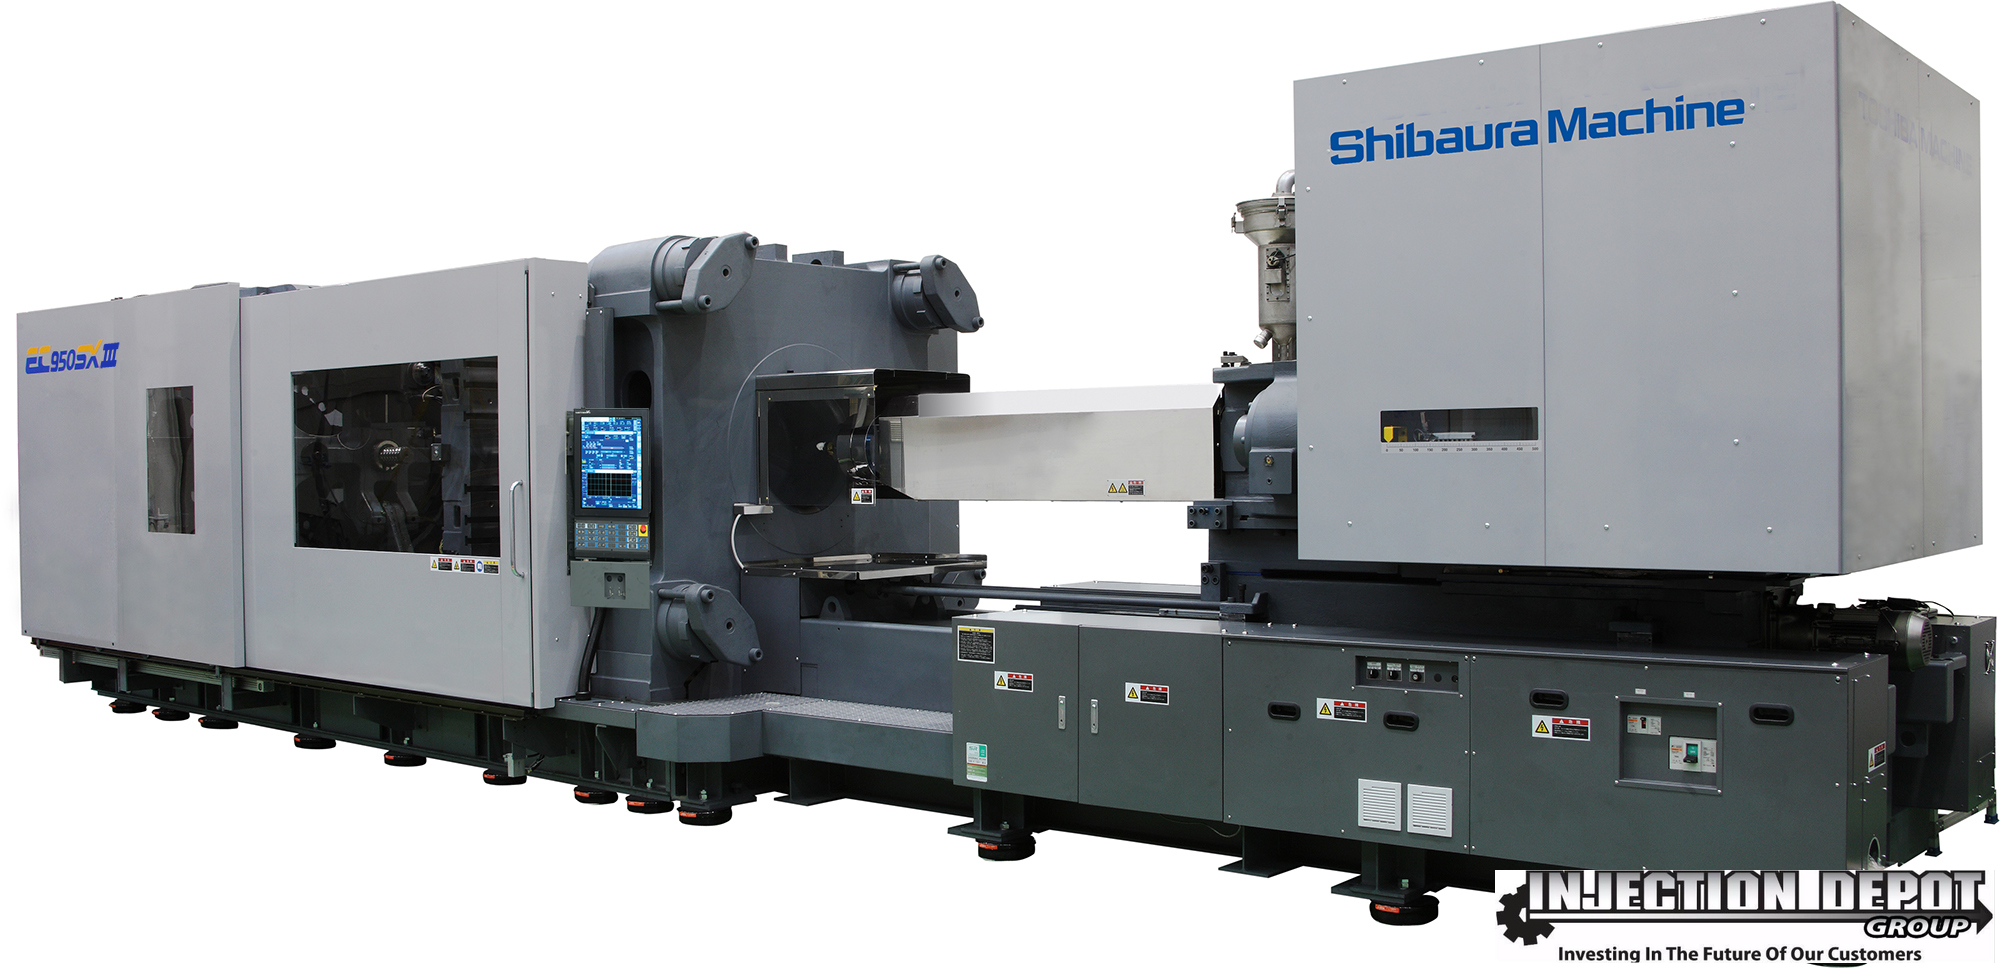 Shibaura Machine EC950SXIIIV70-i61 B Horizontal Injection Moulding Machines | INJECTION DEPOT GROUP